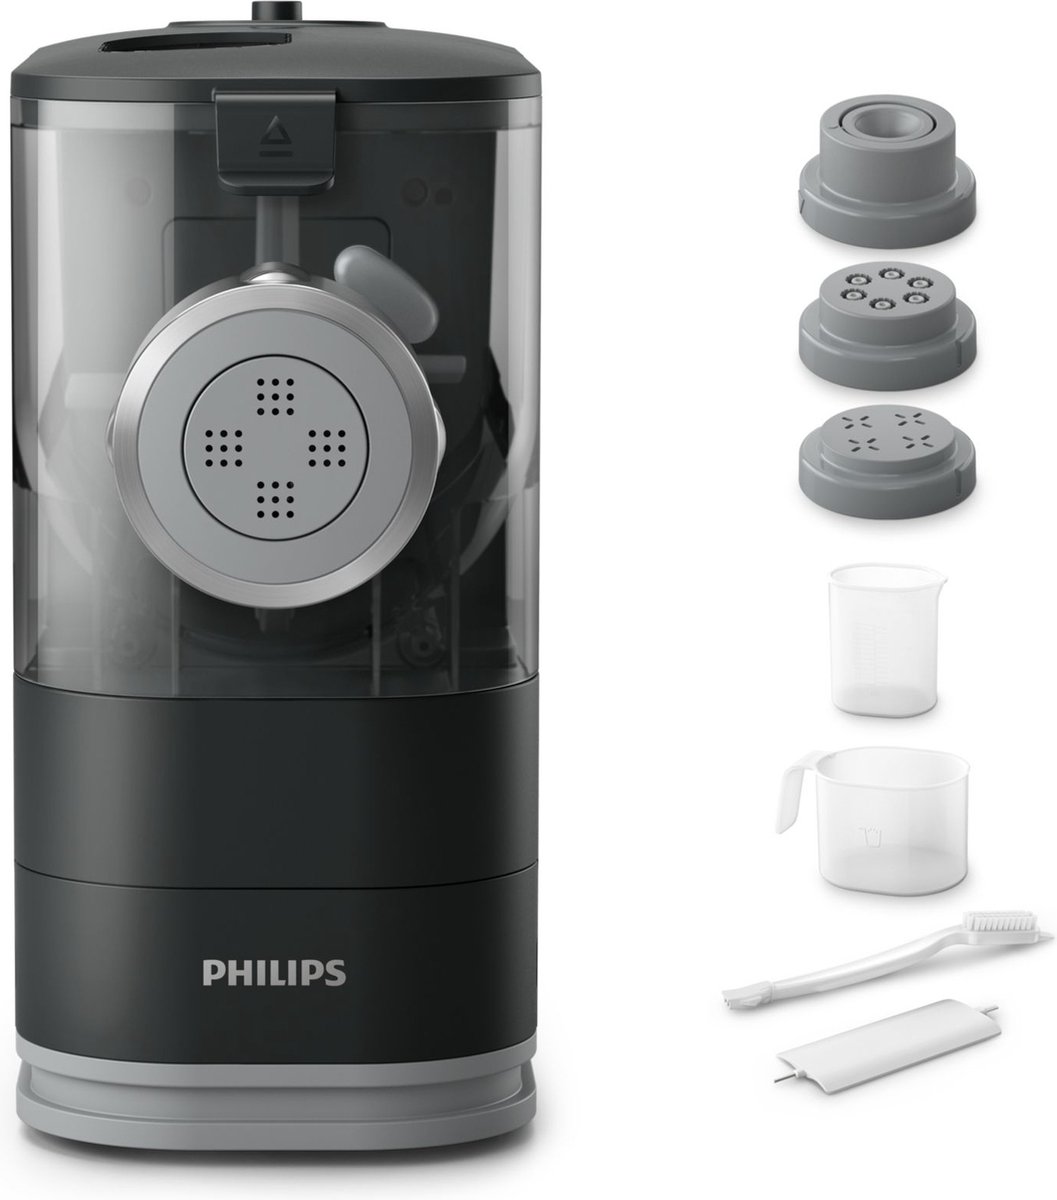 Philips HR 2345 29 Pastamaker VivaPlus zwart